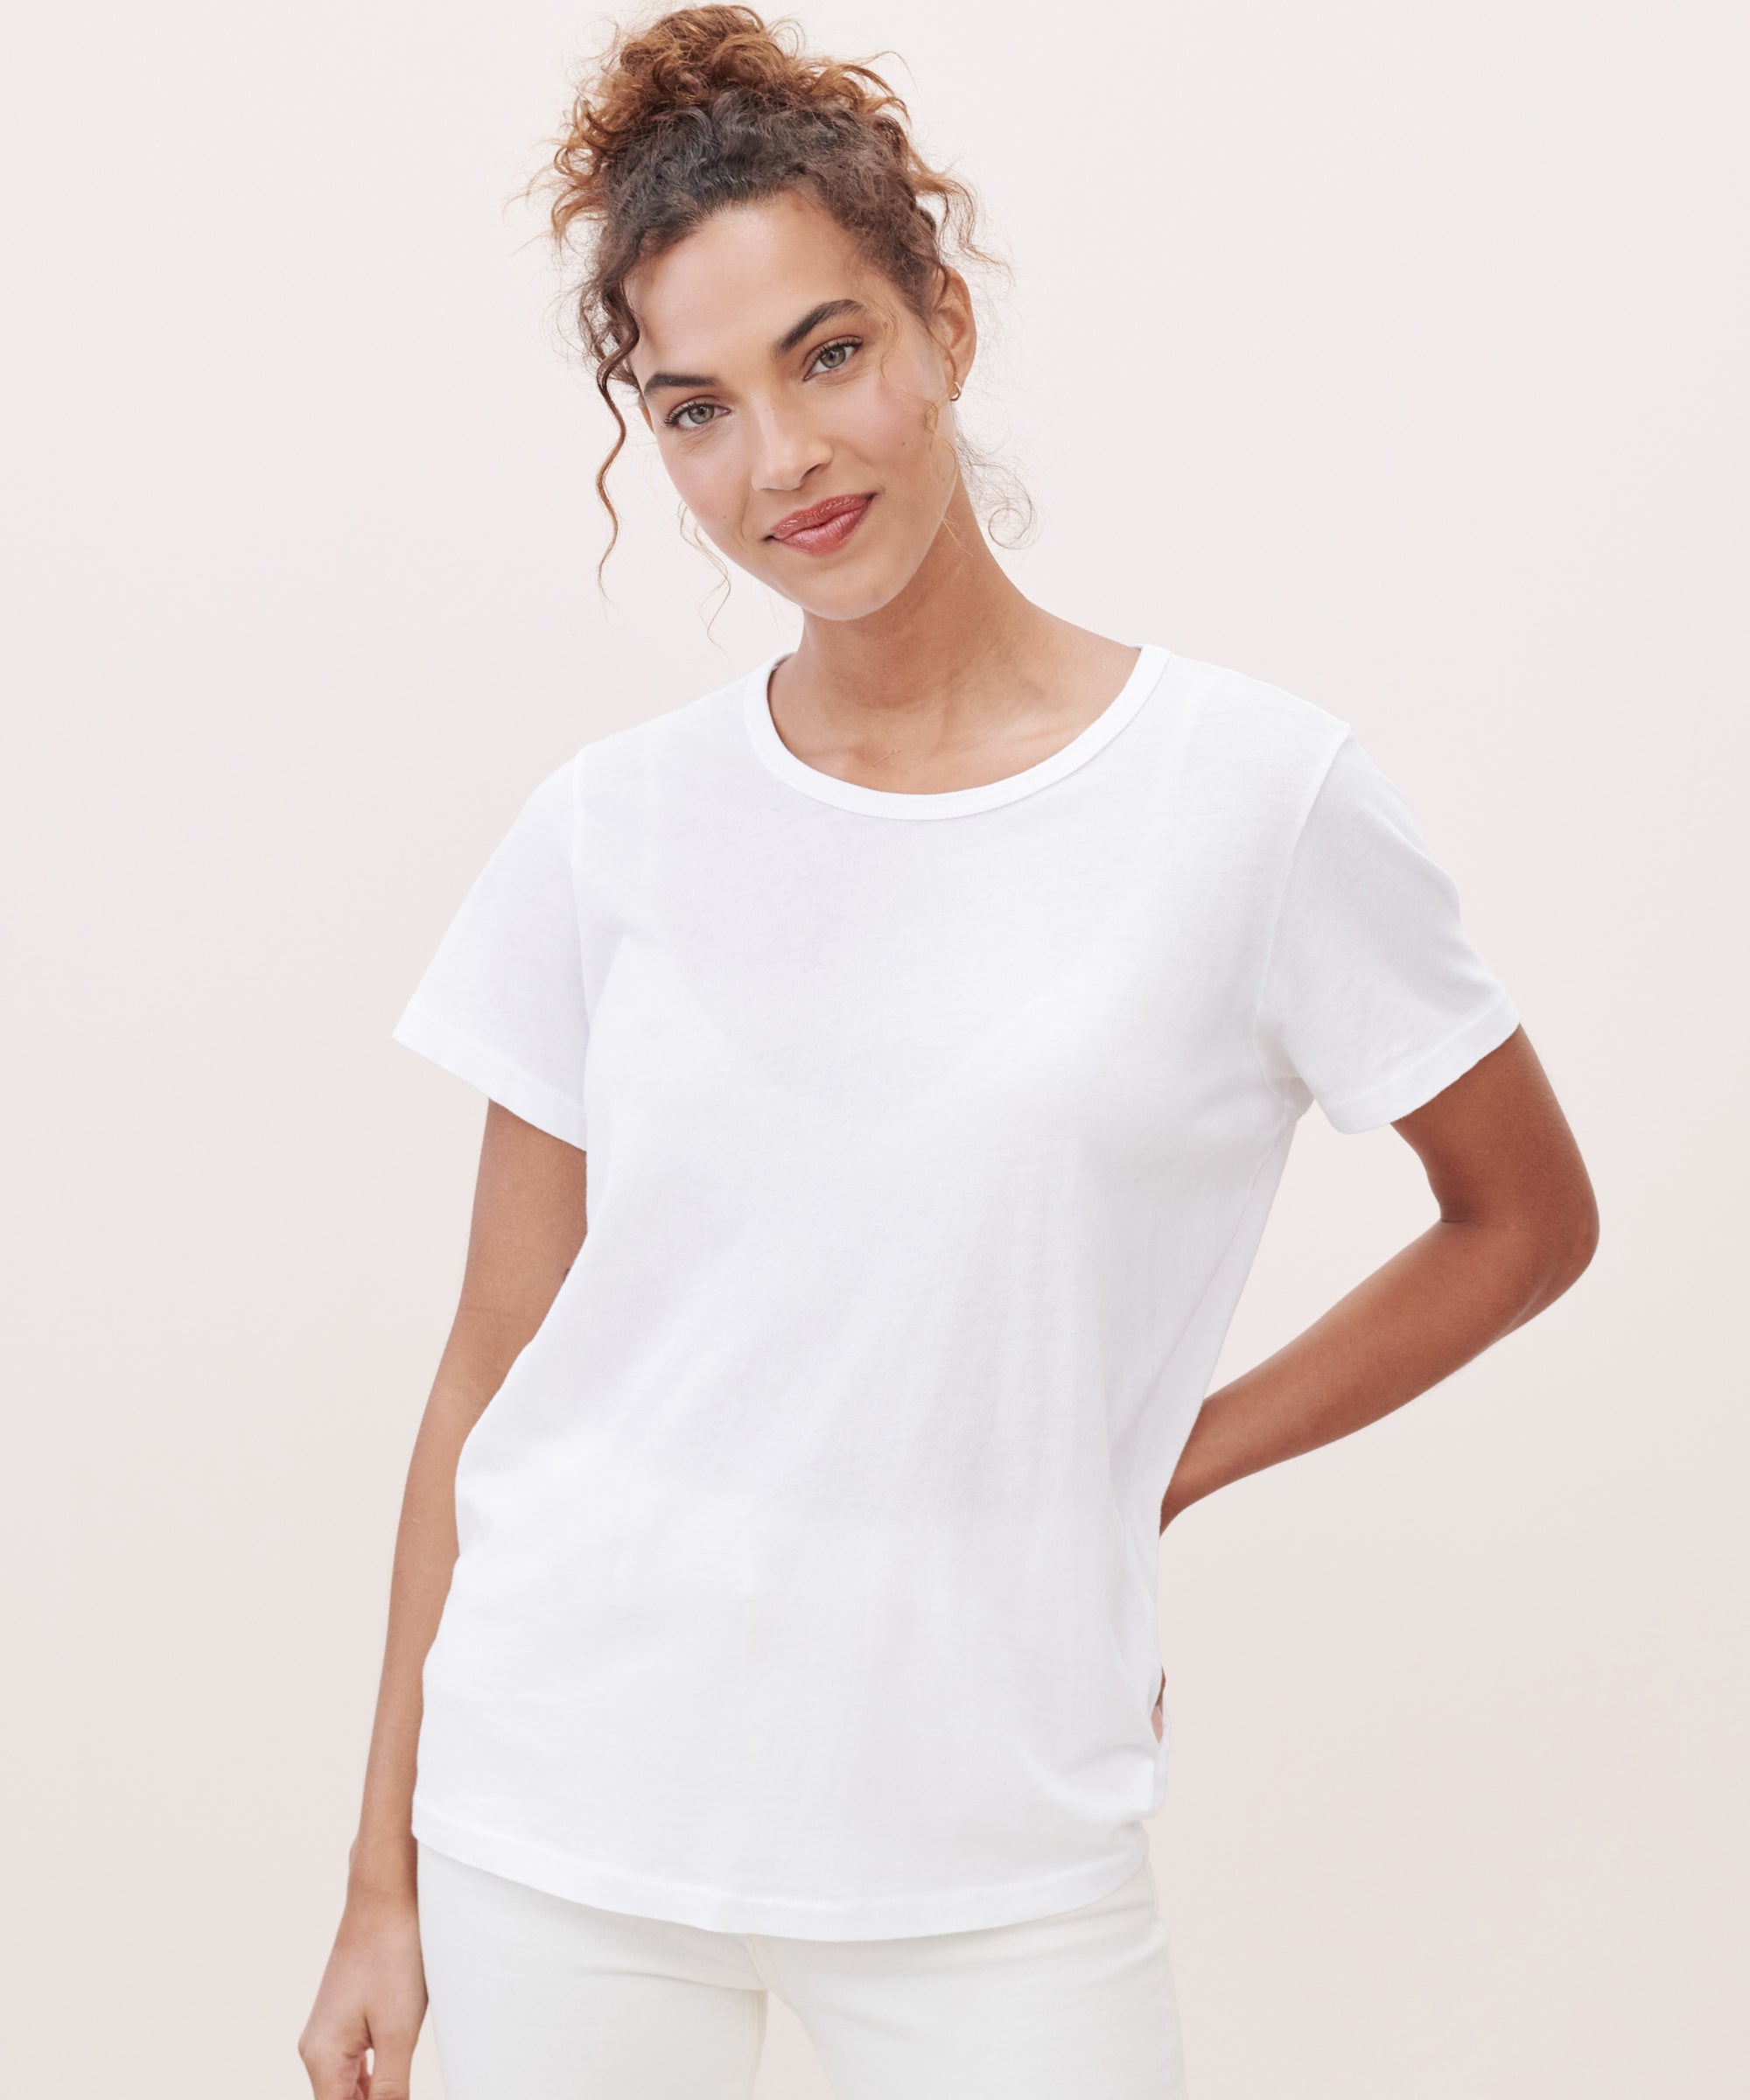 Women's White Plain Shirts & Blouses